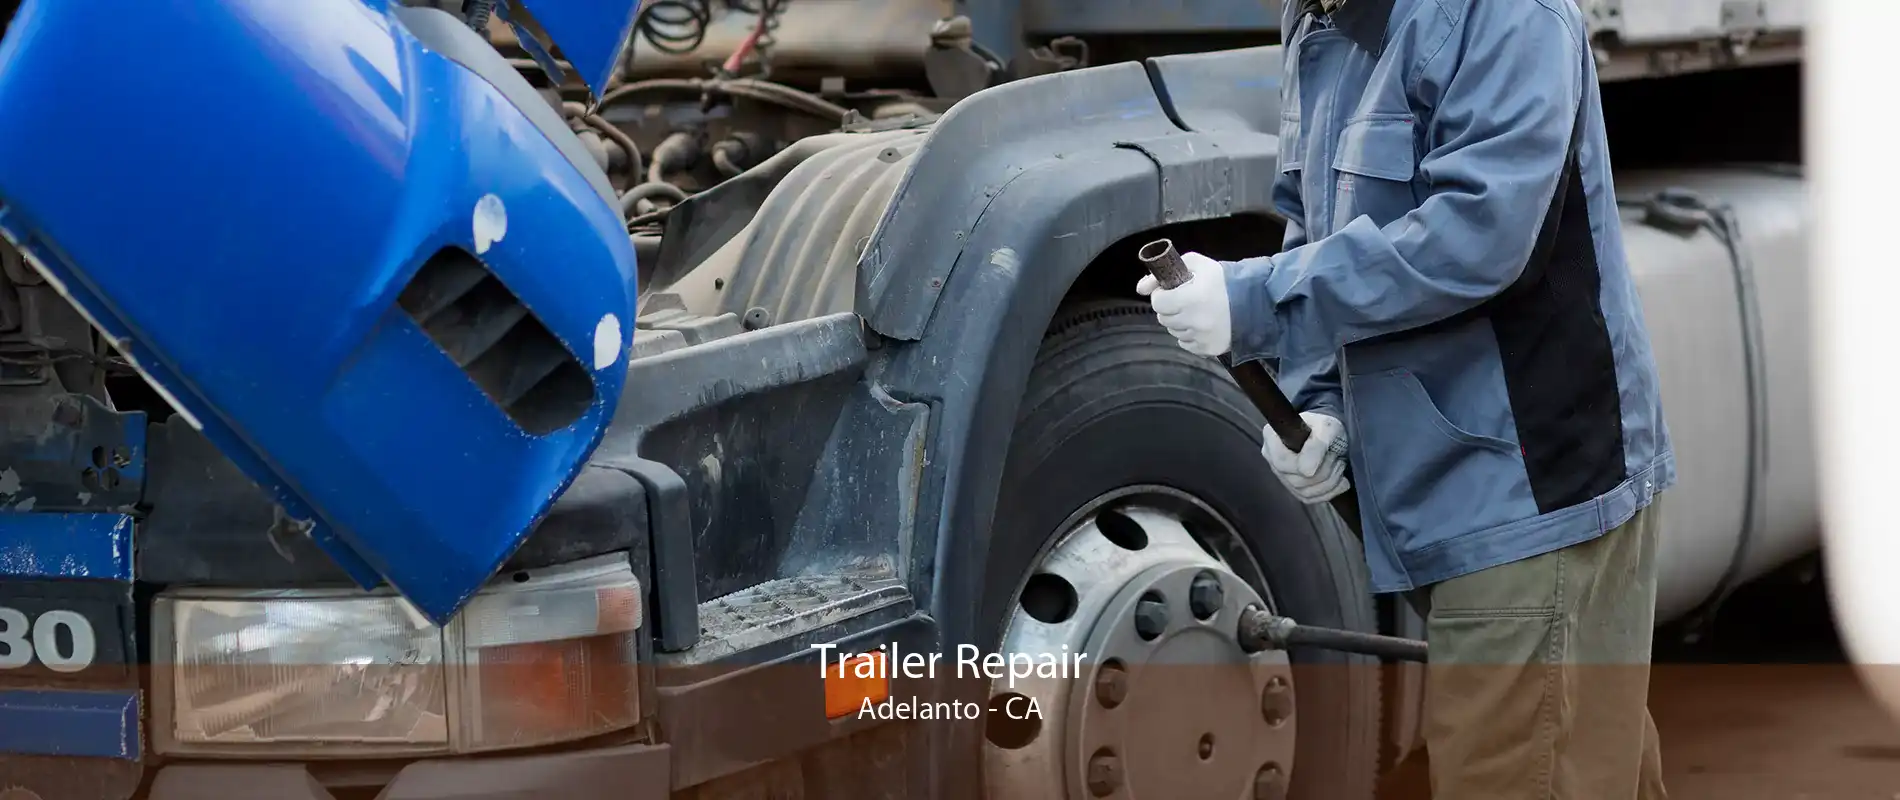 Trailer Repair Adelanto - CA